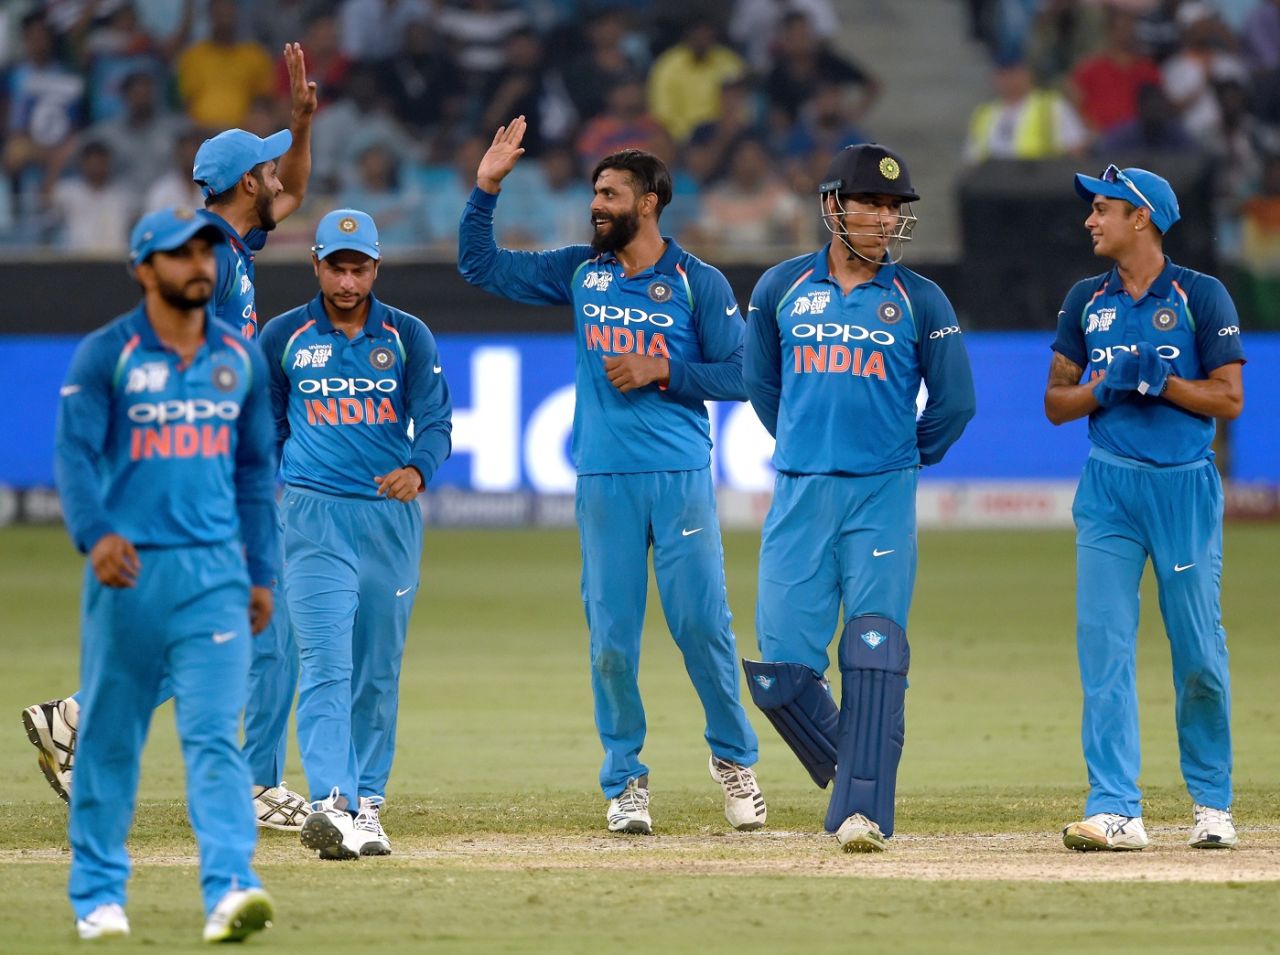 Ravindra Jadeja celebrates a wicket with his team-mates, Afghanistan v India, Asia Cup 2018, Dubai, September 25, 2018